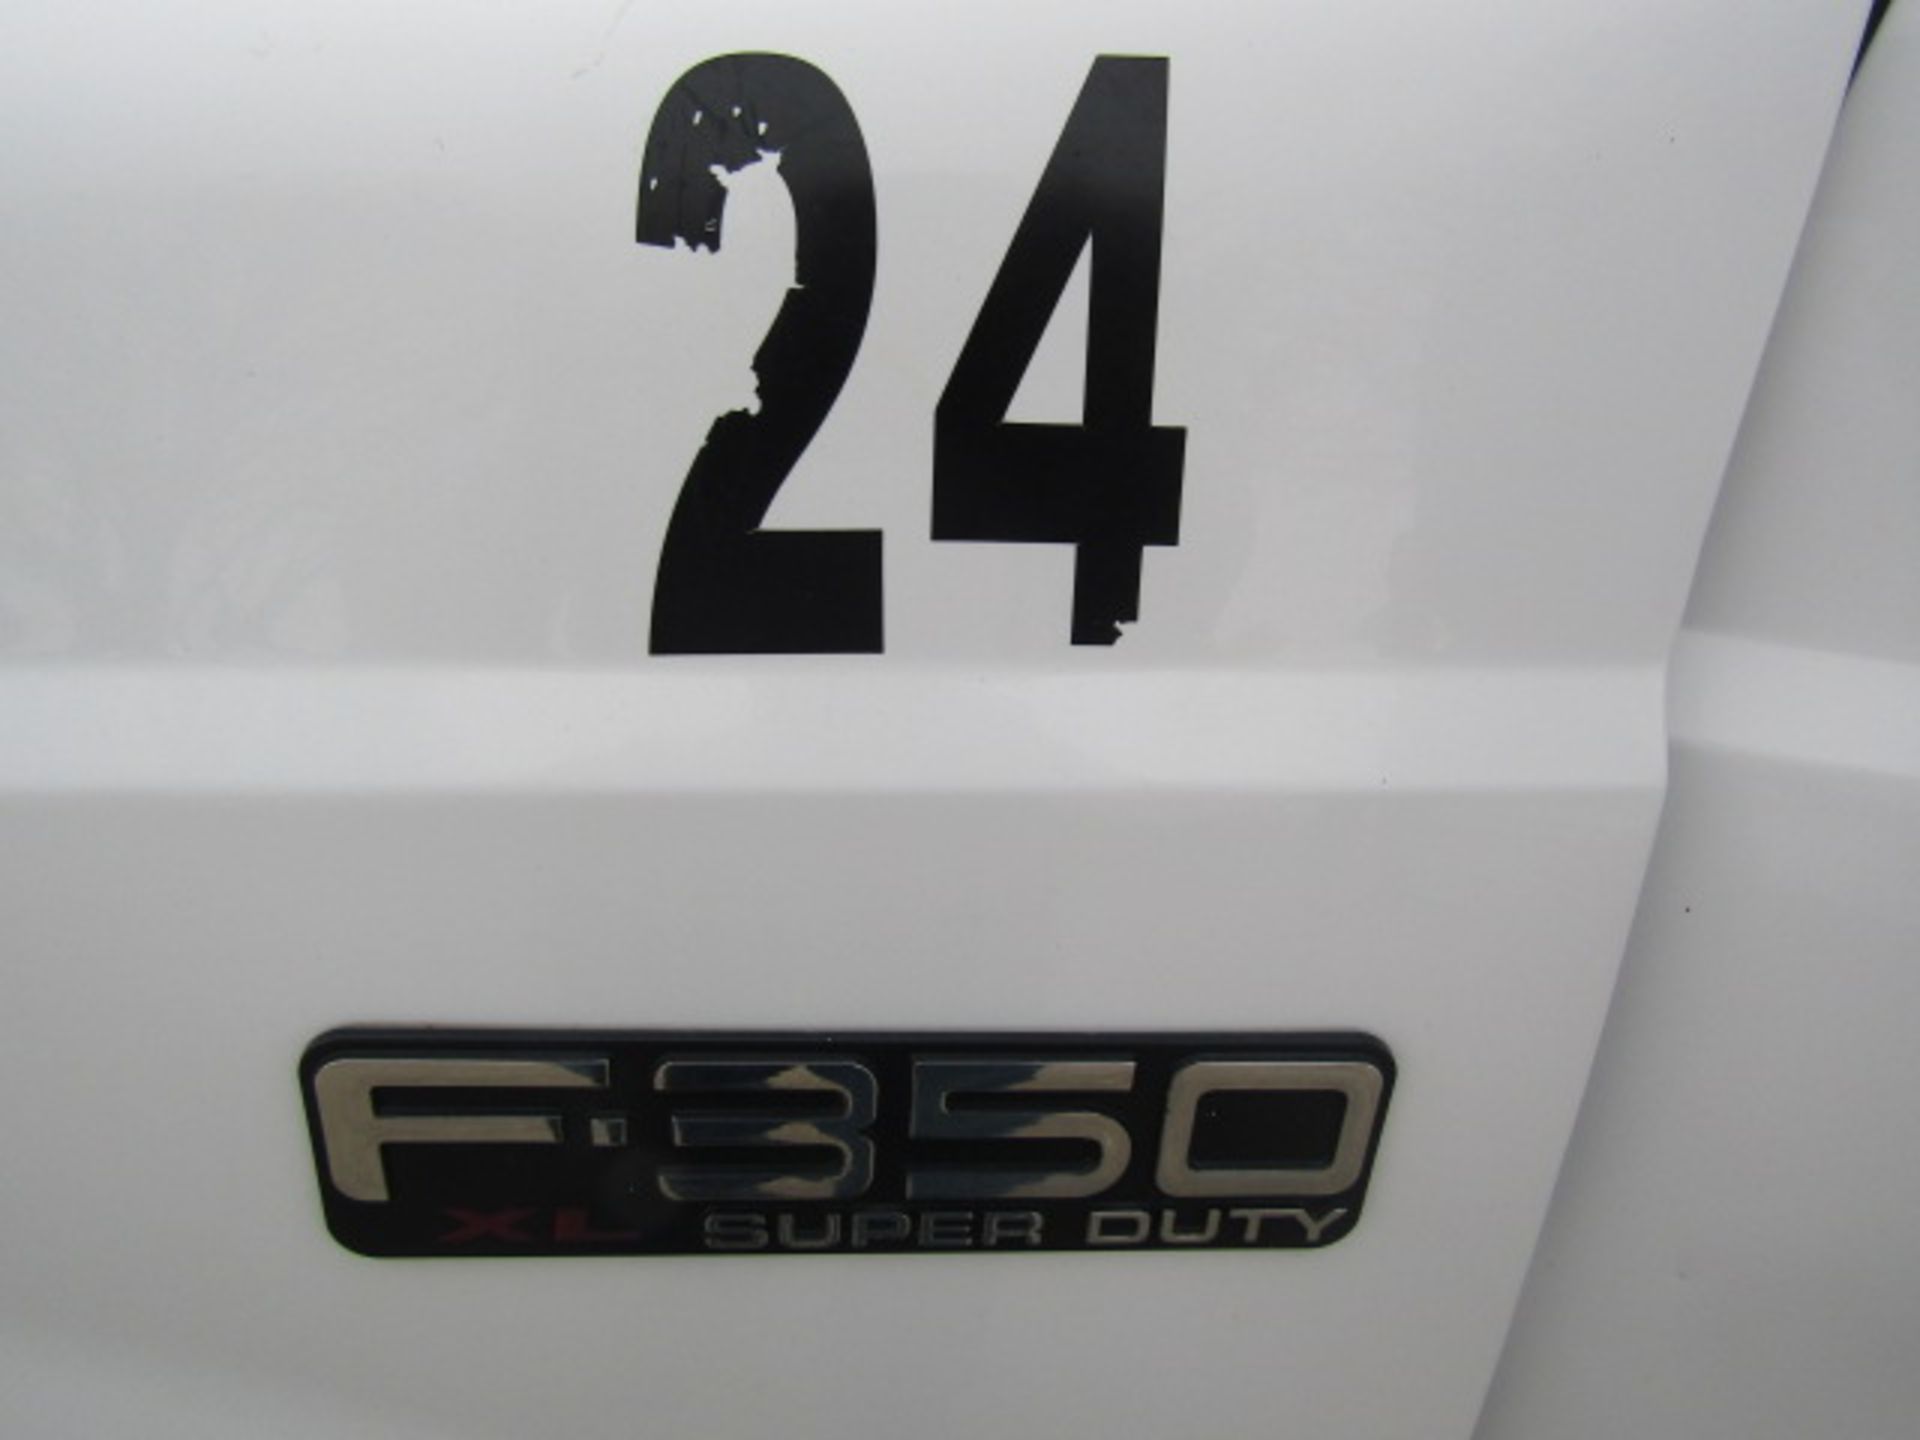 2001 Ford F350 Super Duty Crew Cab Utility Truck, Vin#1FDWW37F91EC51782, Automatic 4x4 Transmission, - Image 7 of 20